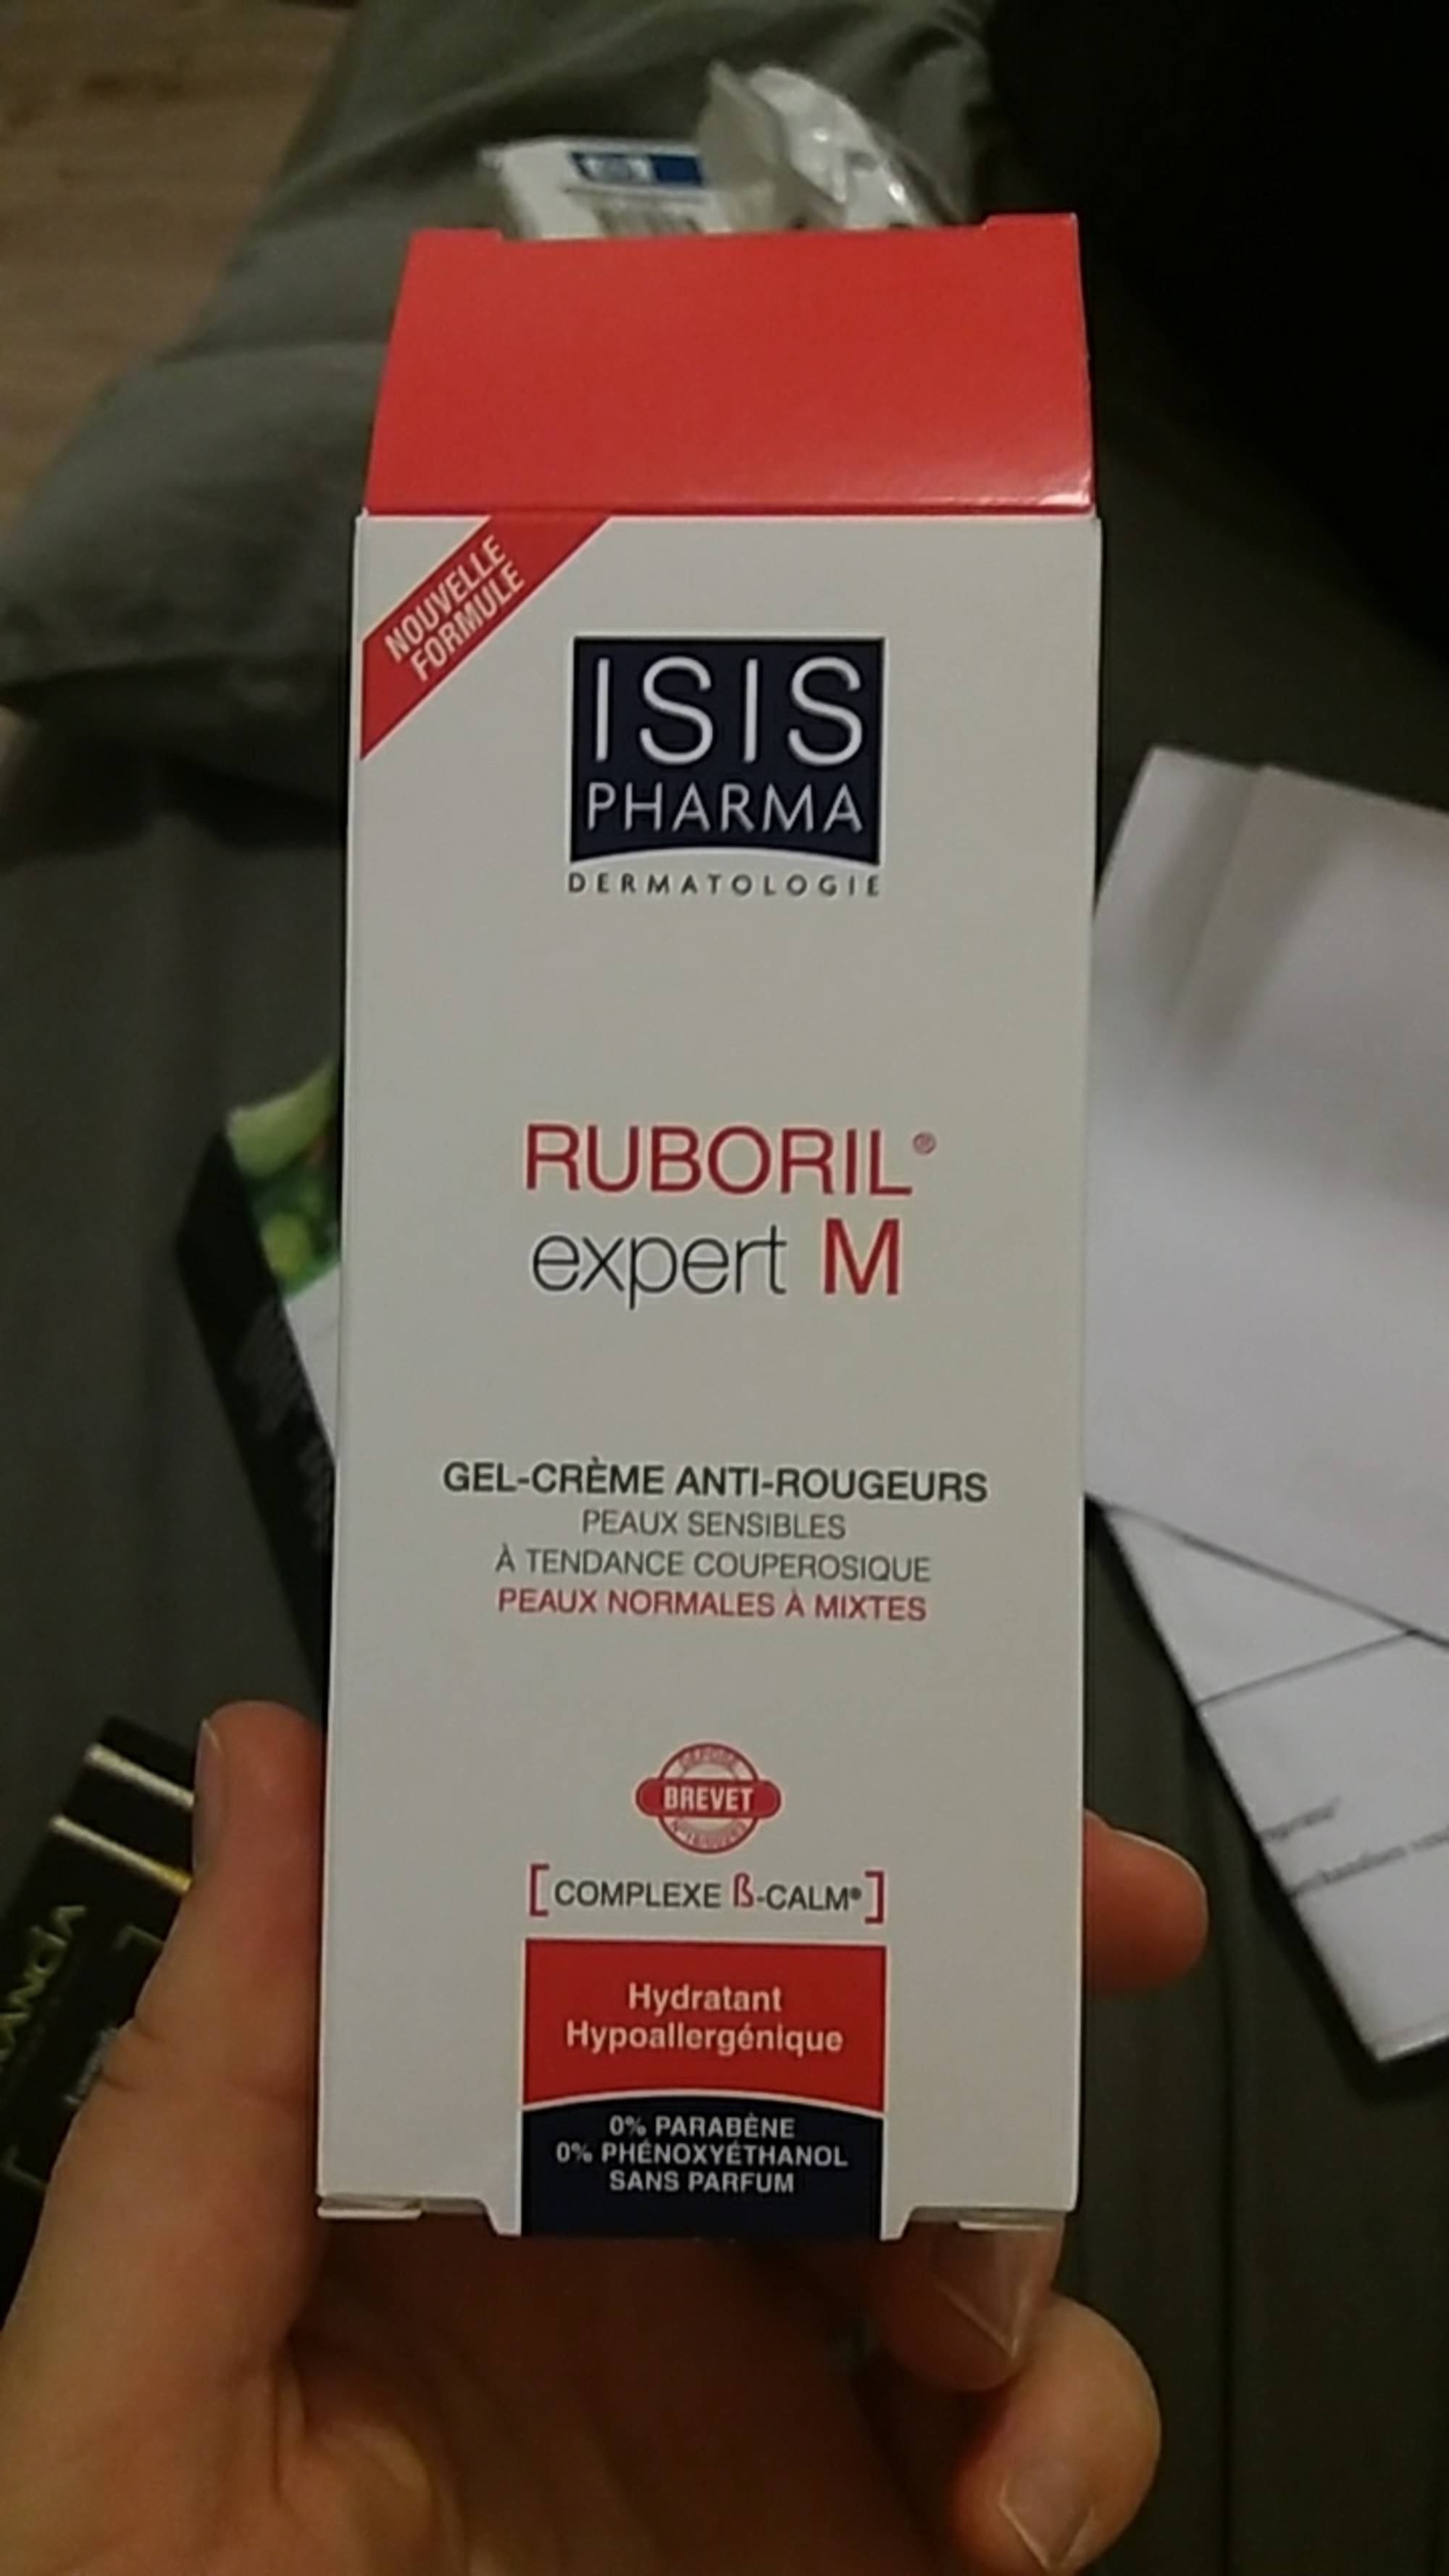 ISIS PHARMA - Ruboril expert M - Gel-crème anti-rougeurs